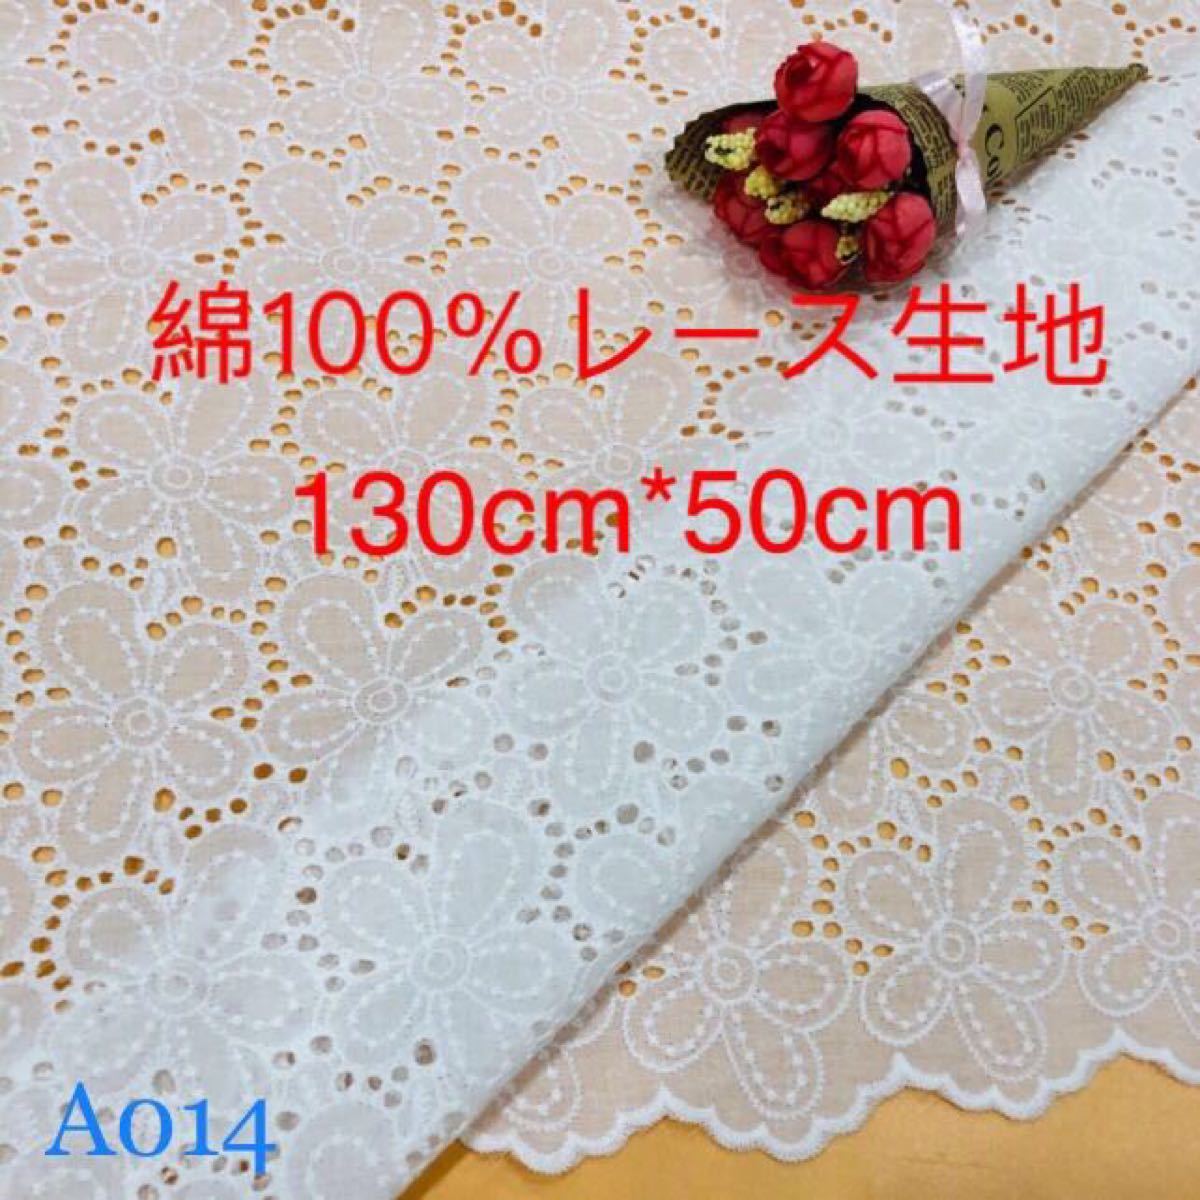 A014 綿100% カット 花柄 刺繍 綿レース生地130cm*50cm